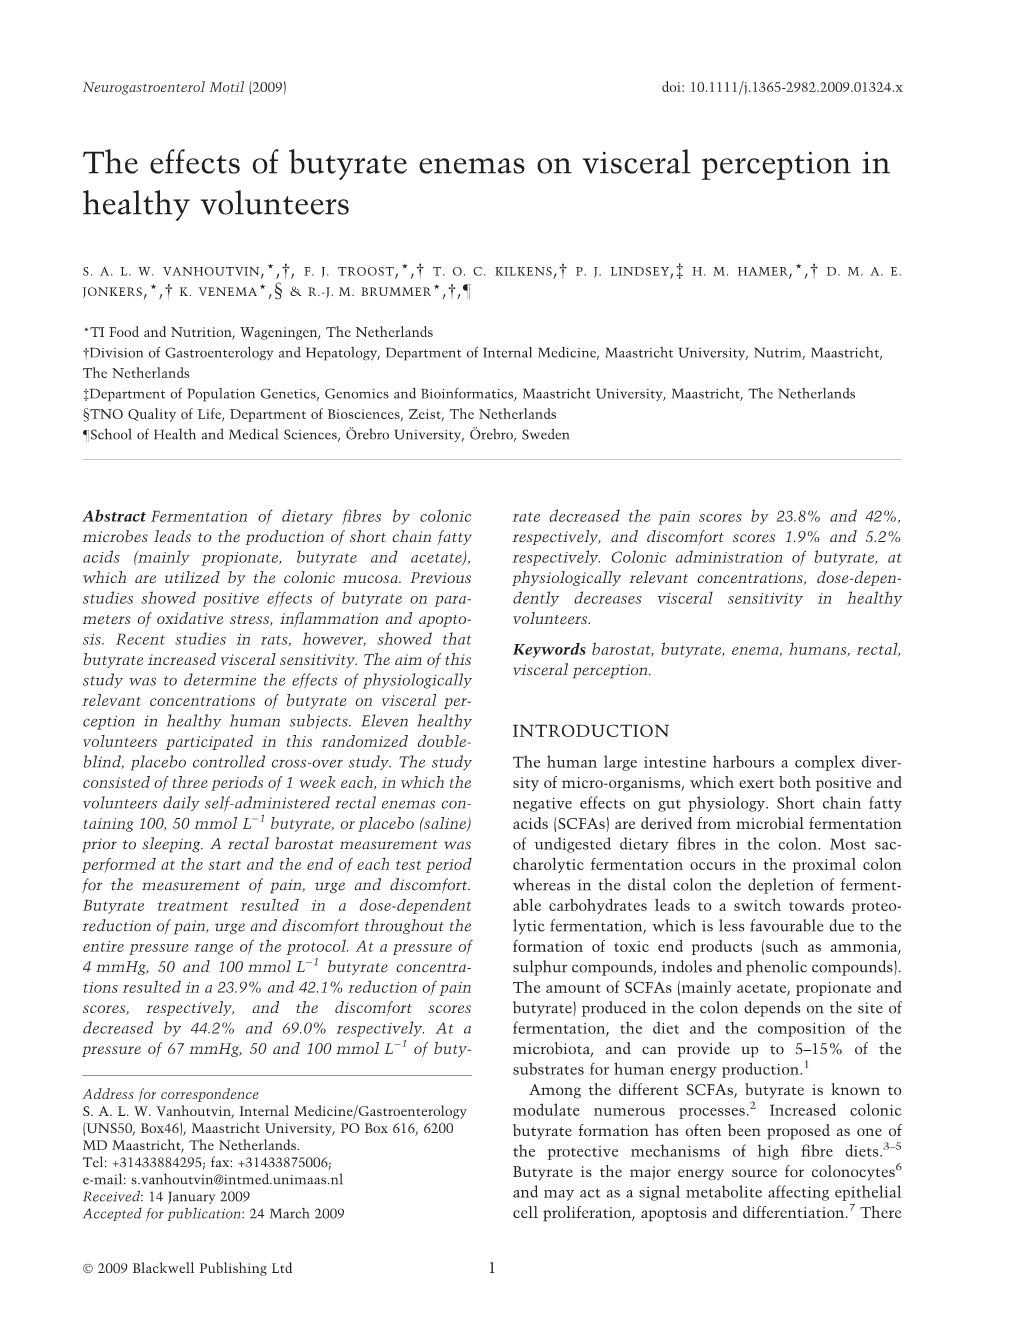 The Effects of Butyrate Enemas on Visceral Perception in Healthy Volunteers